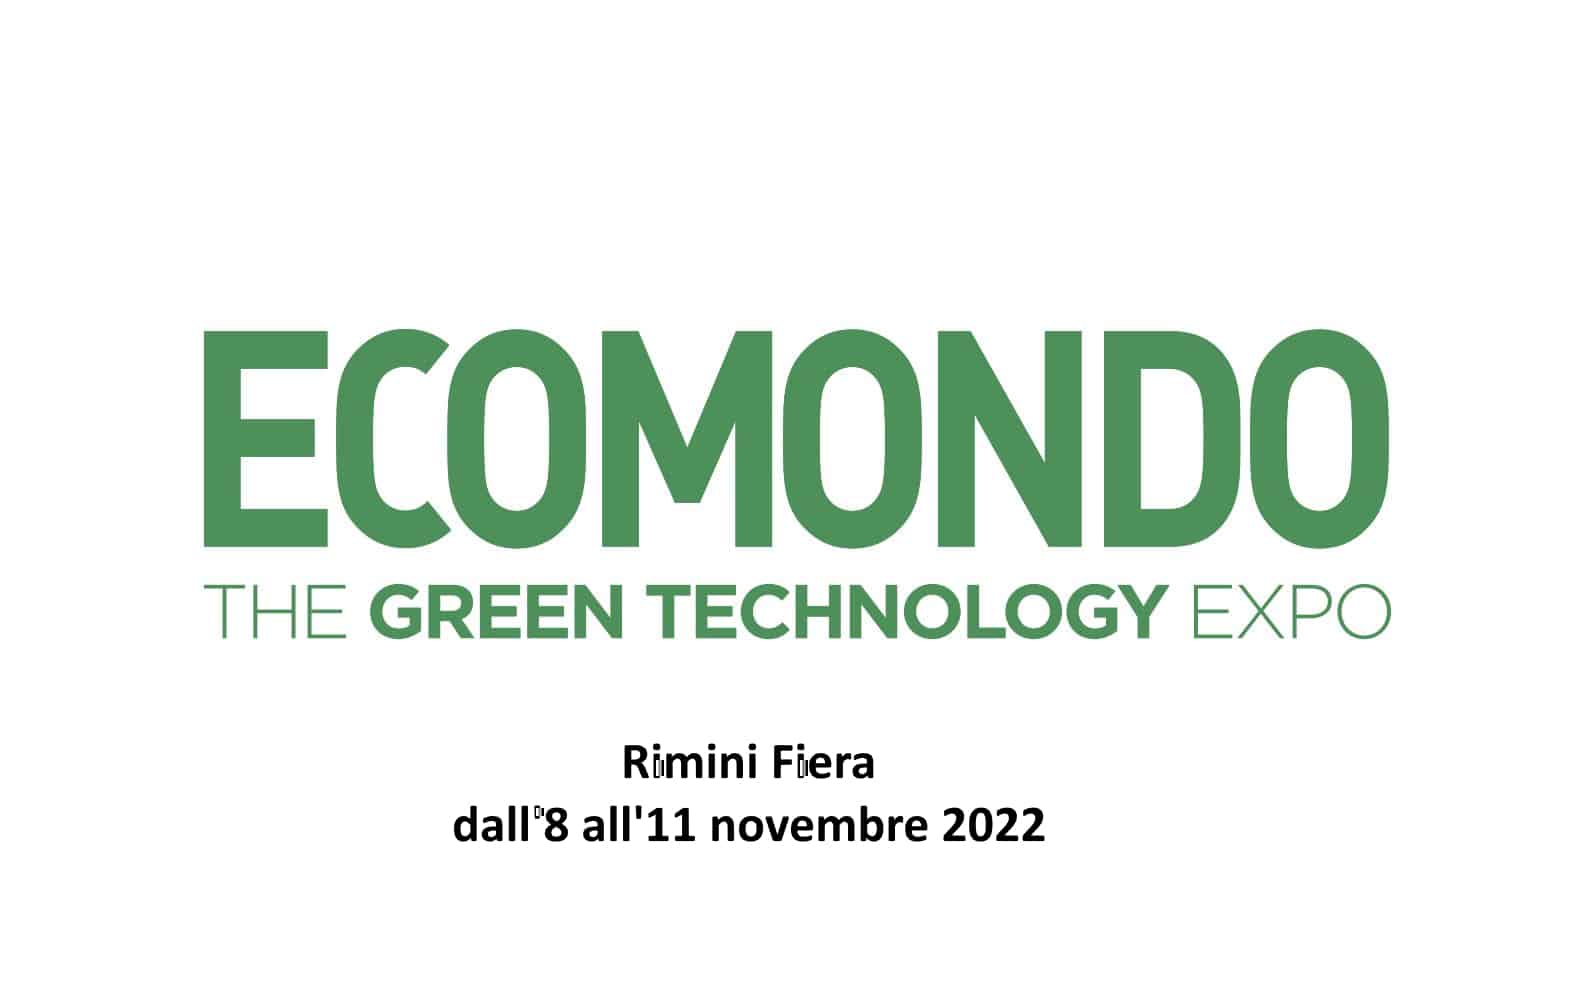 See image of Ecomondo Rimini